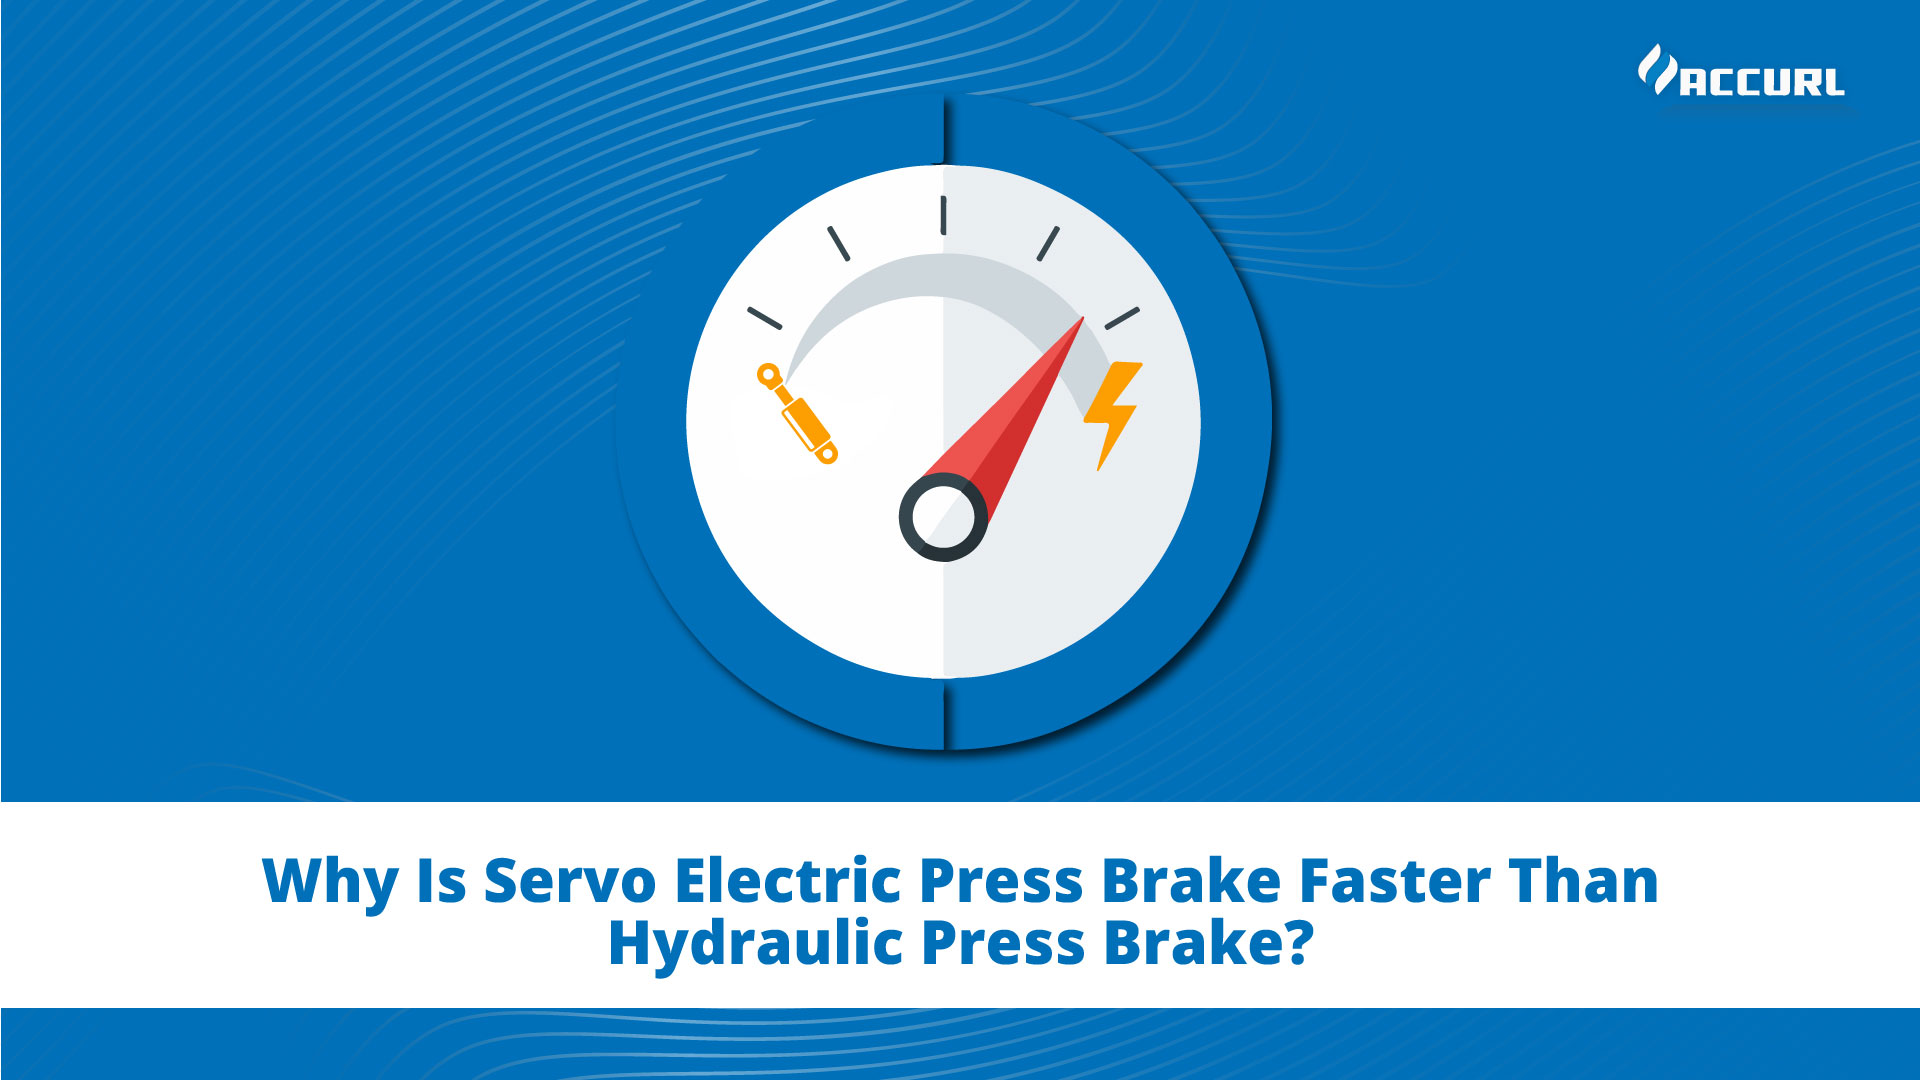 Why Is Servo Electric Press Brake Faster Than Hydraulic Press Brake?